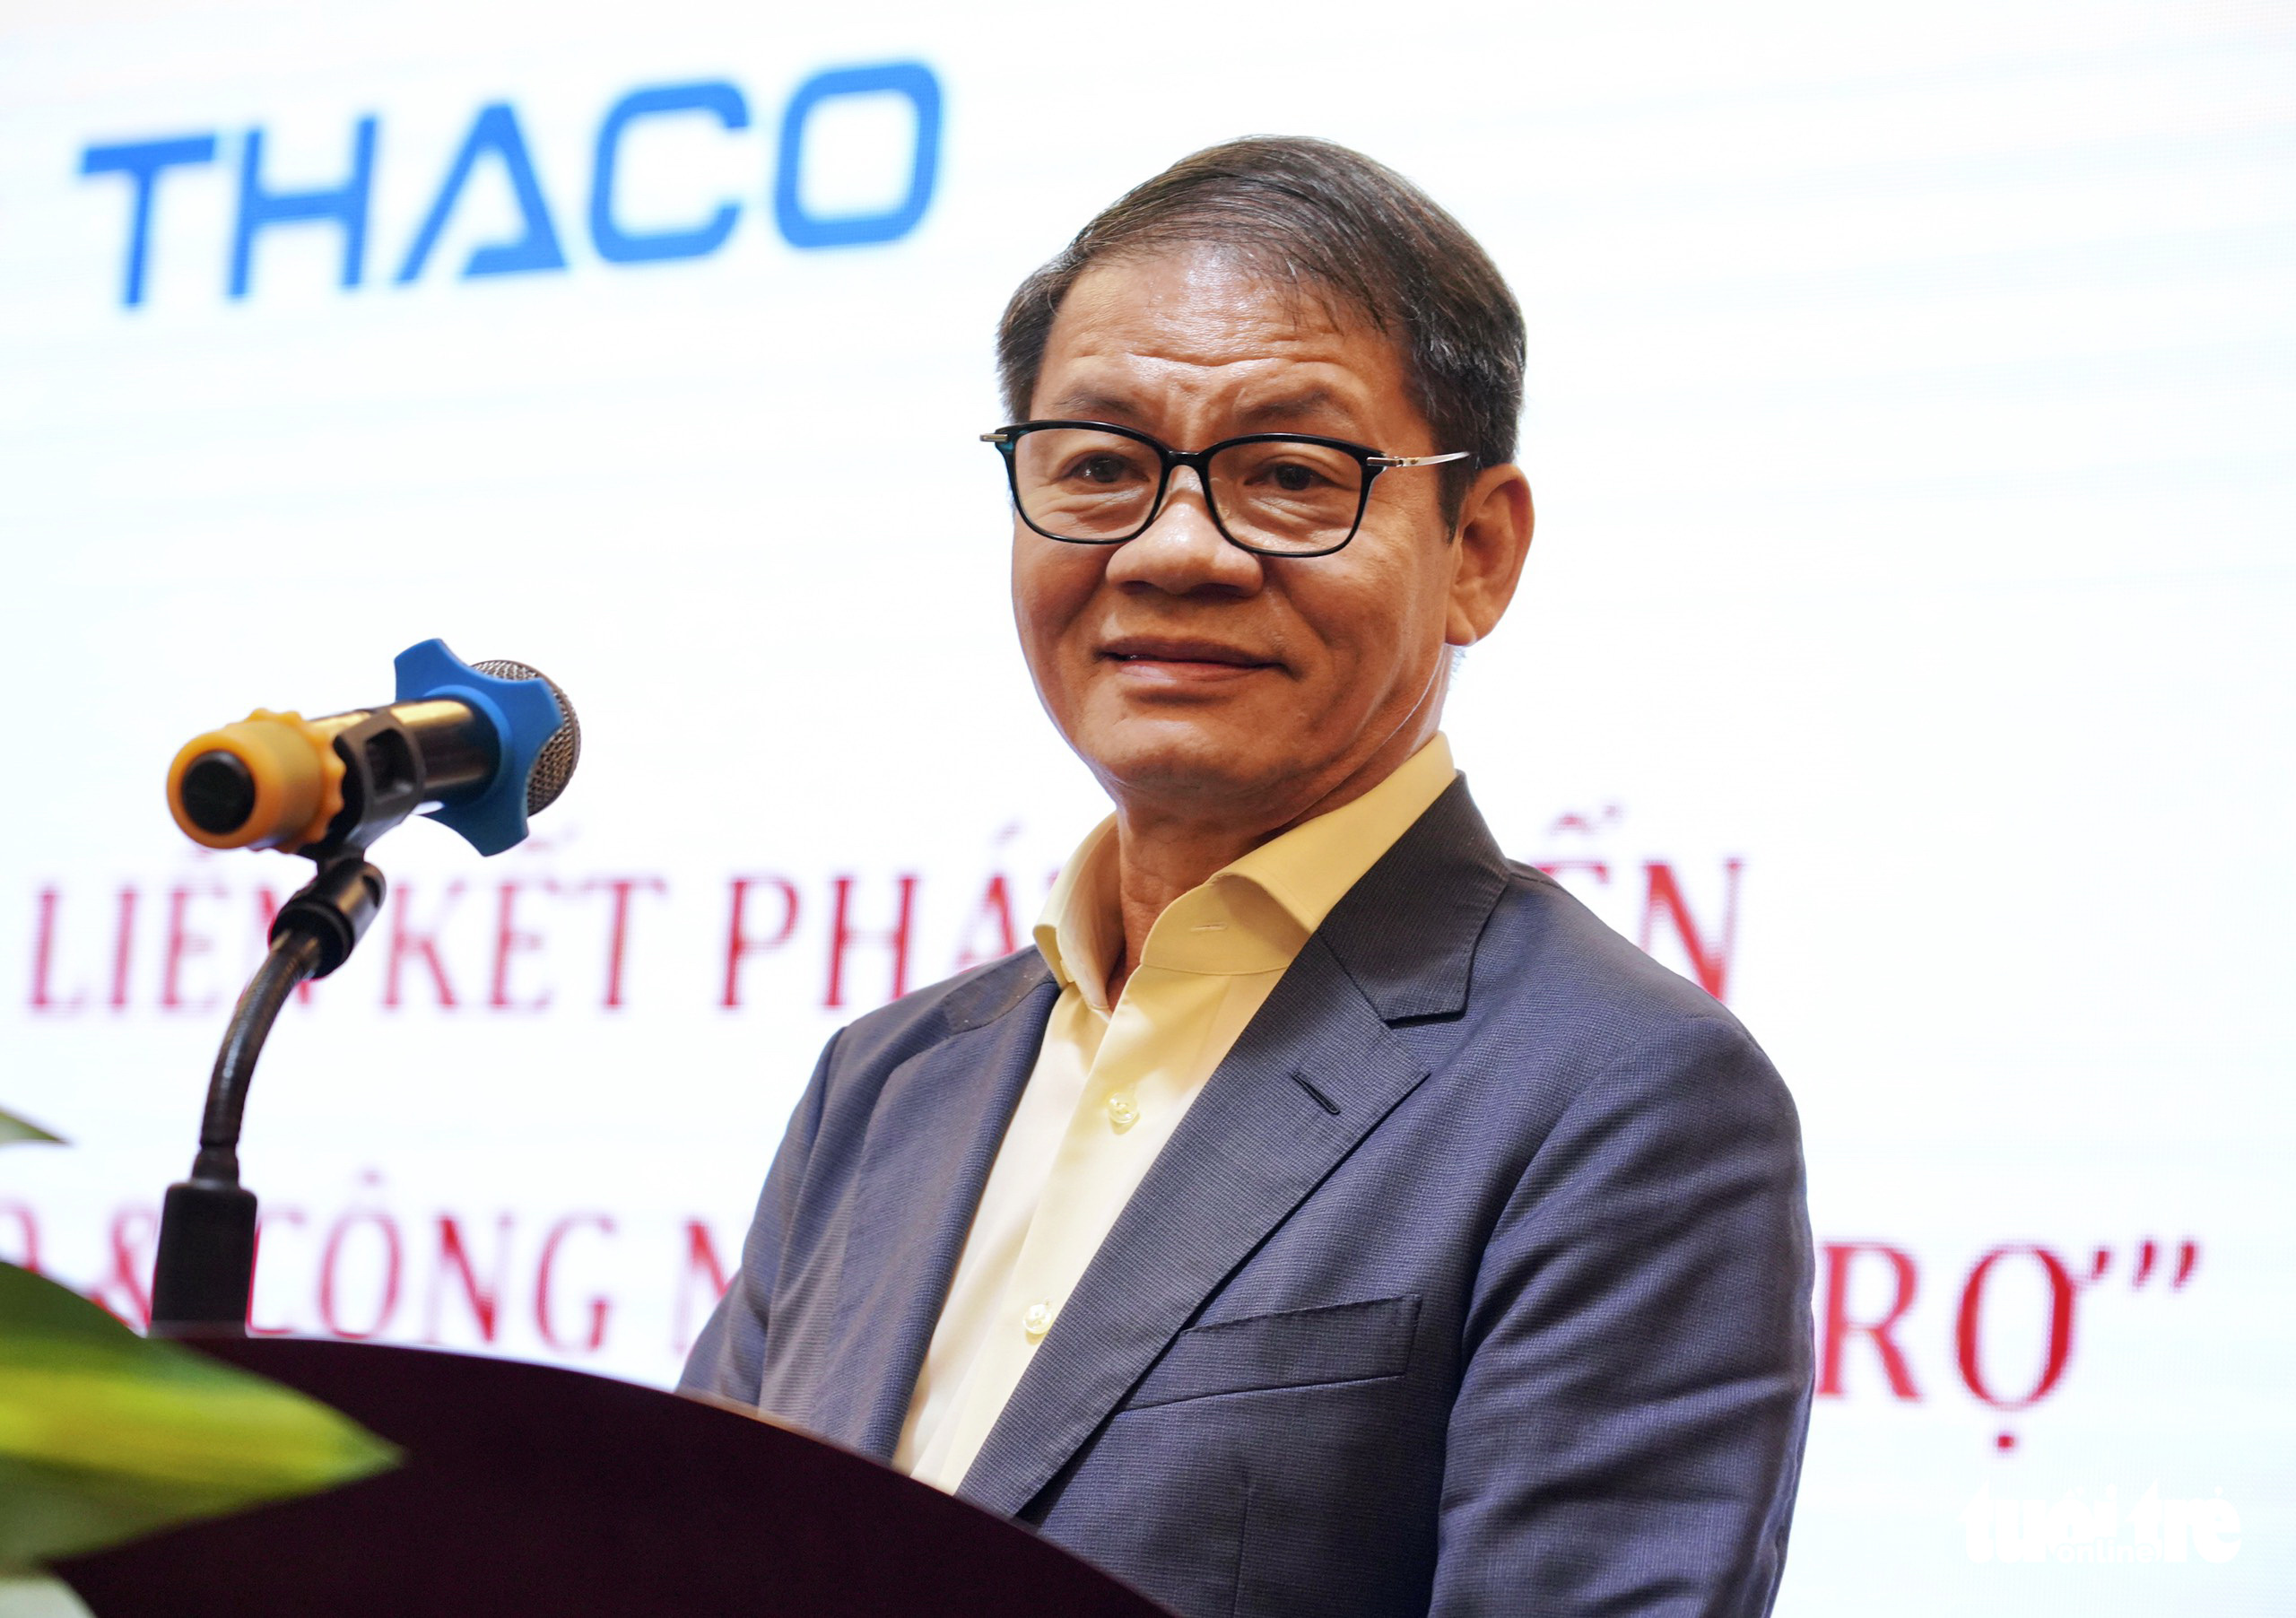 Vietnam’s THACO chairman hopes to emulate Foxconn’s success